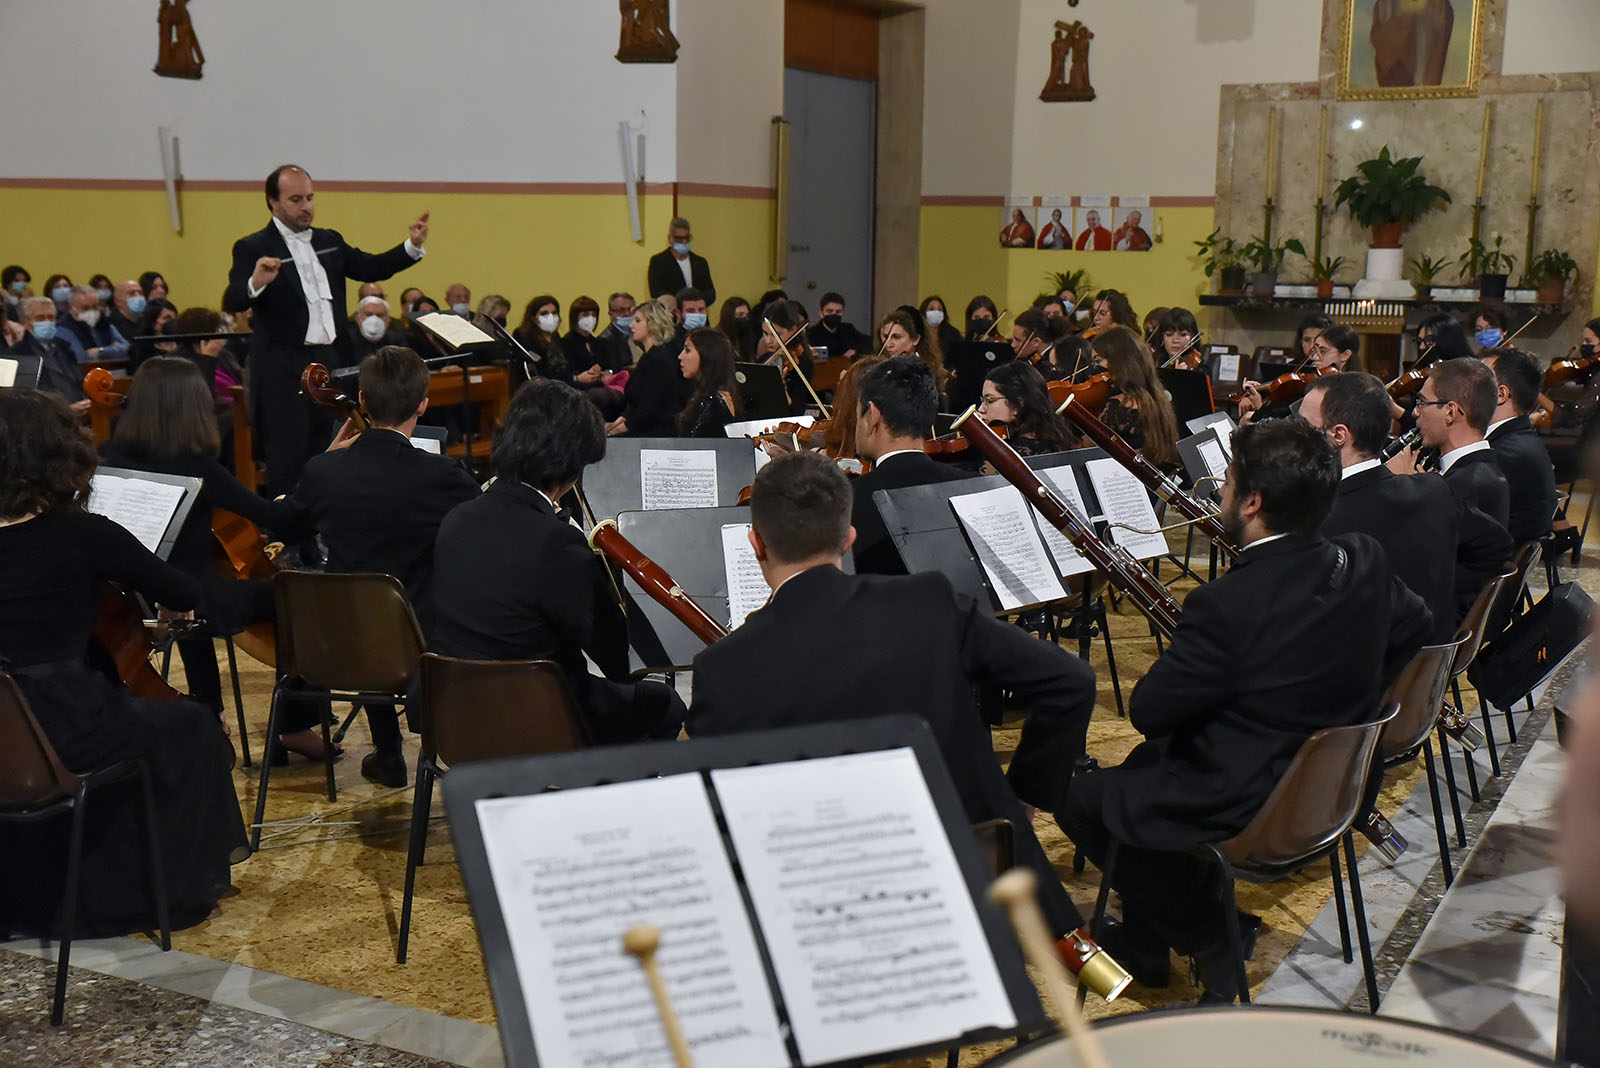 Our Apologia - Orchestra Magna Grecia